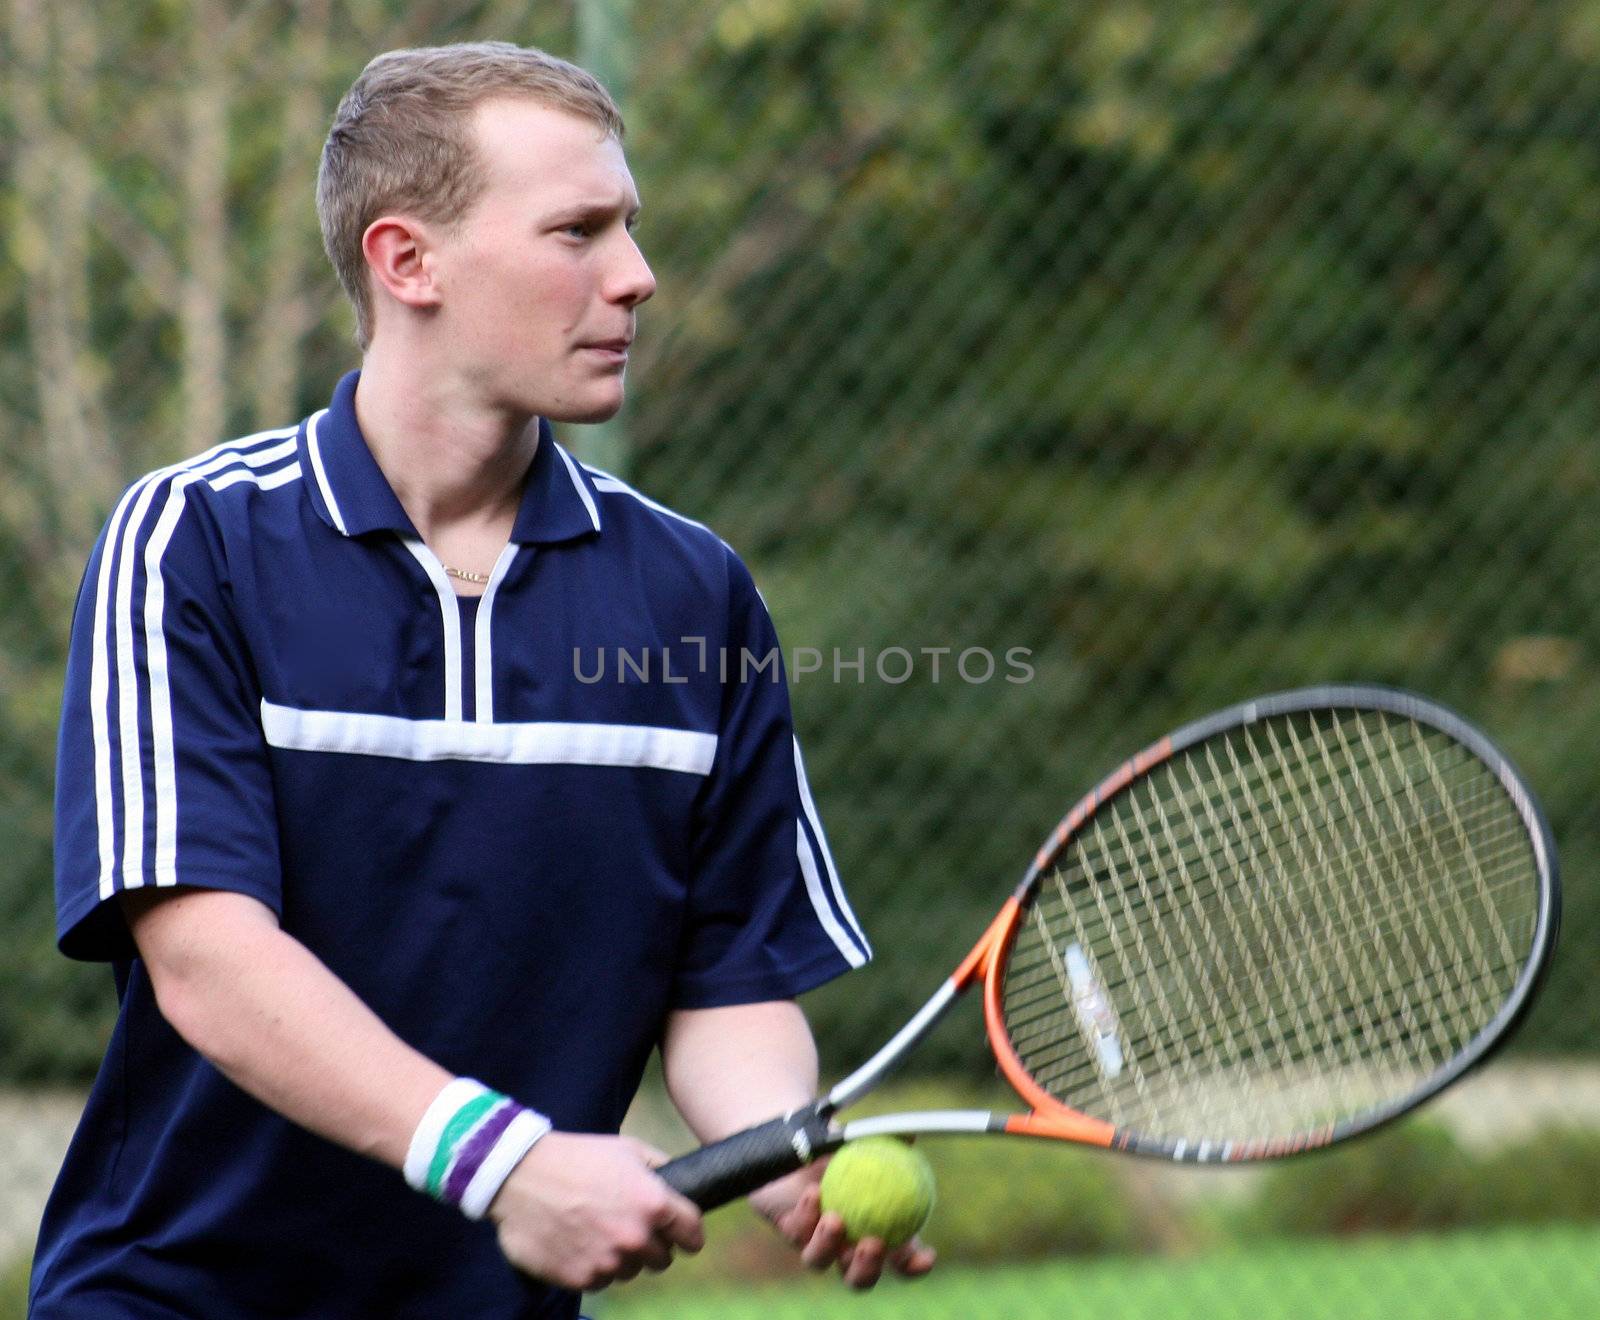 James Tennis by quackersnaps